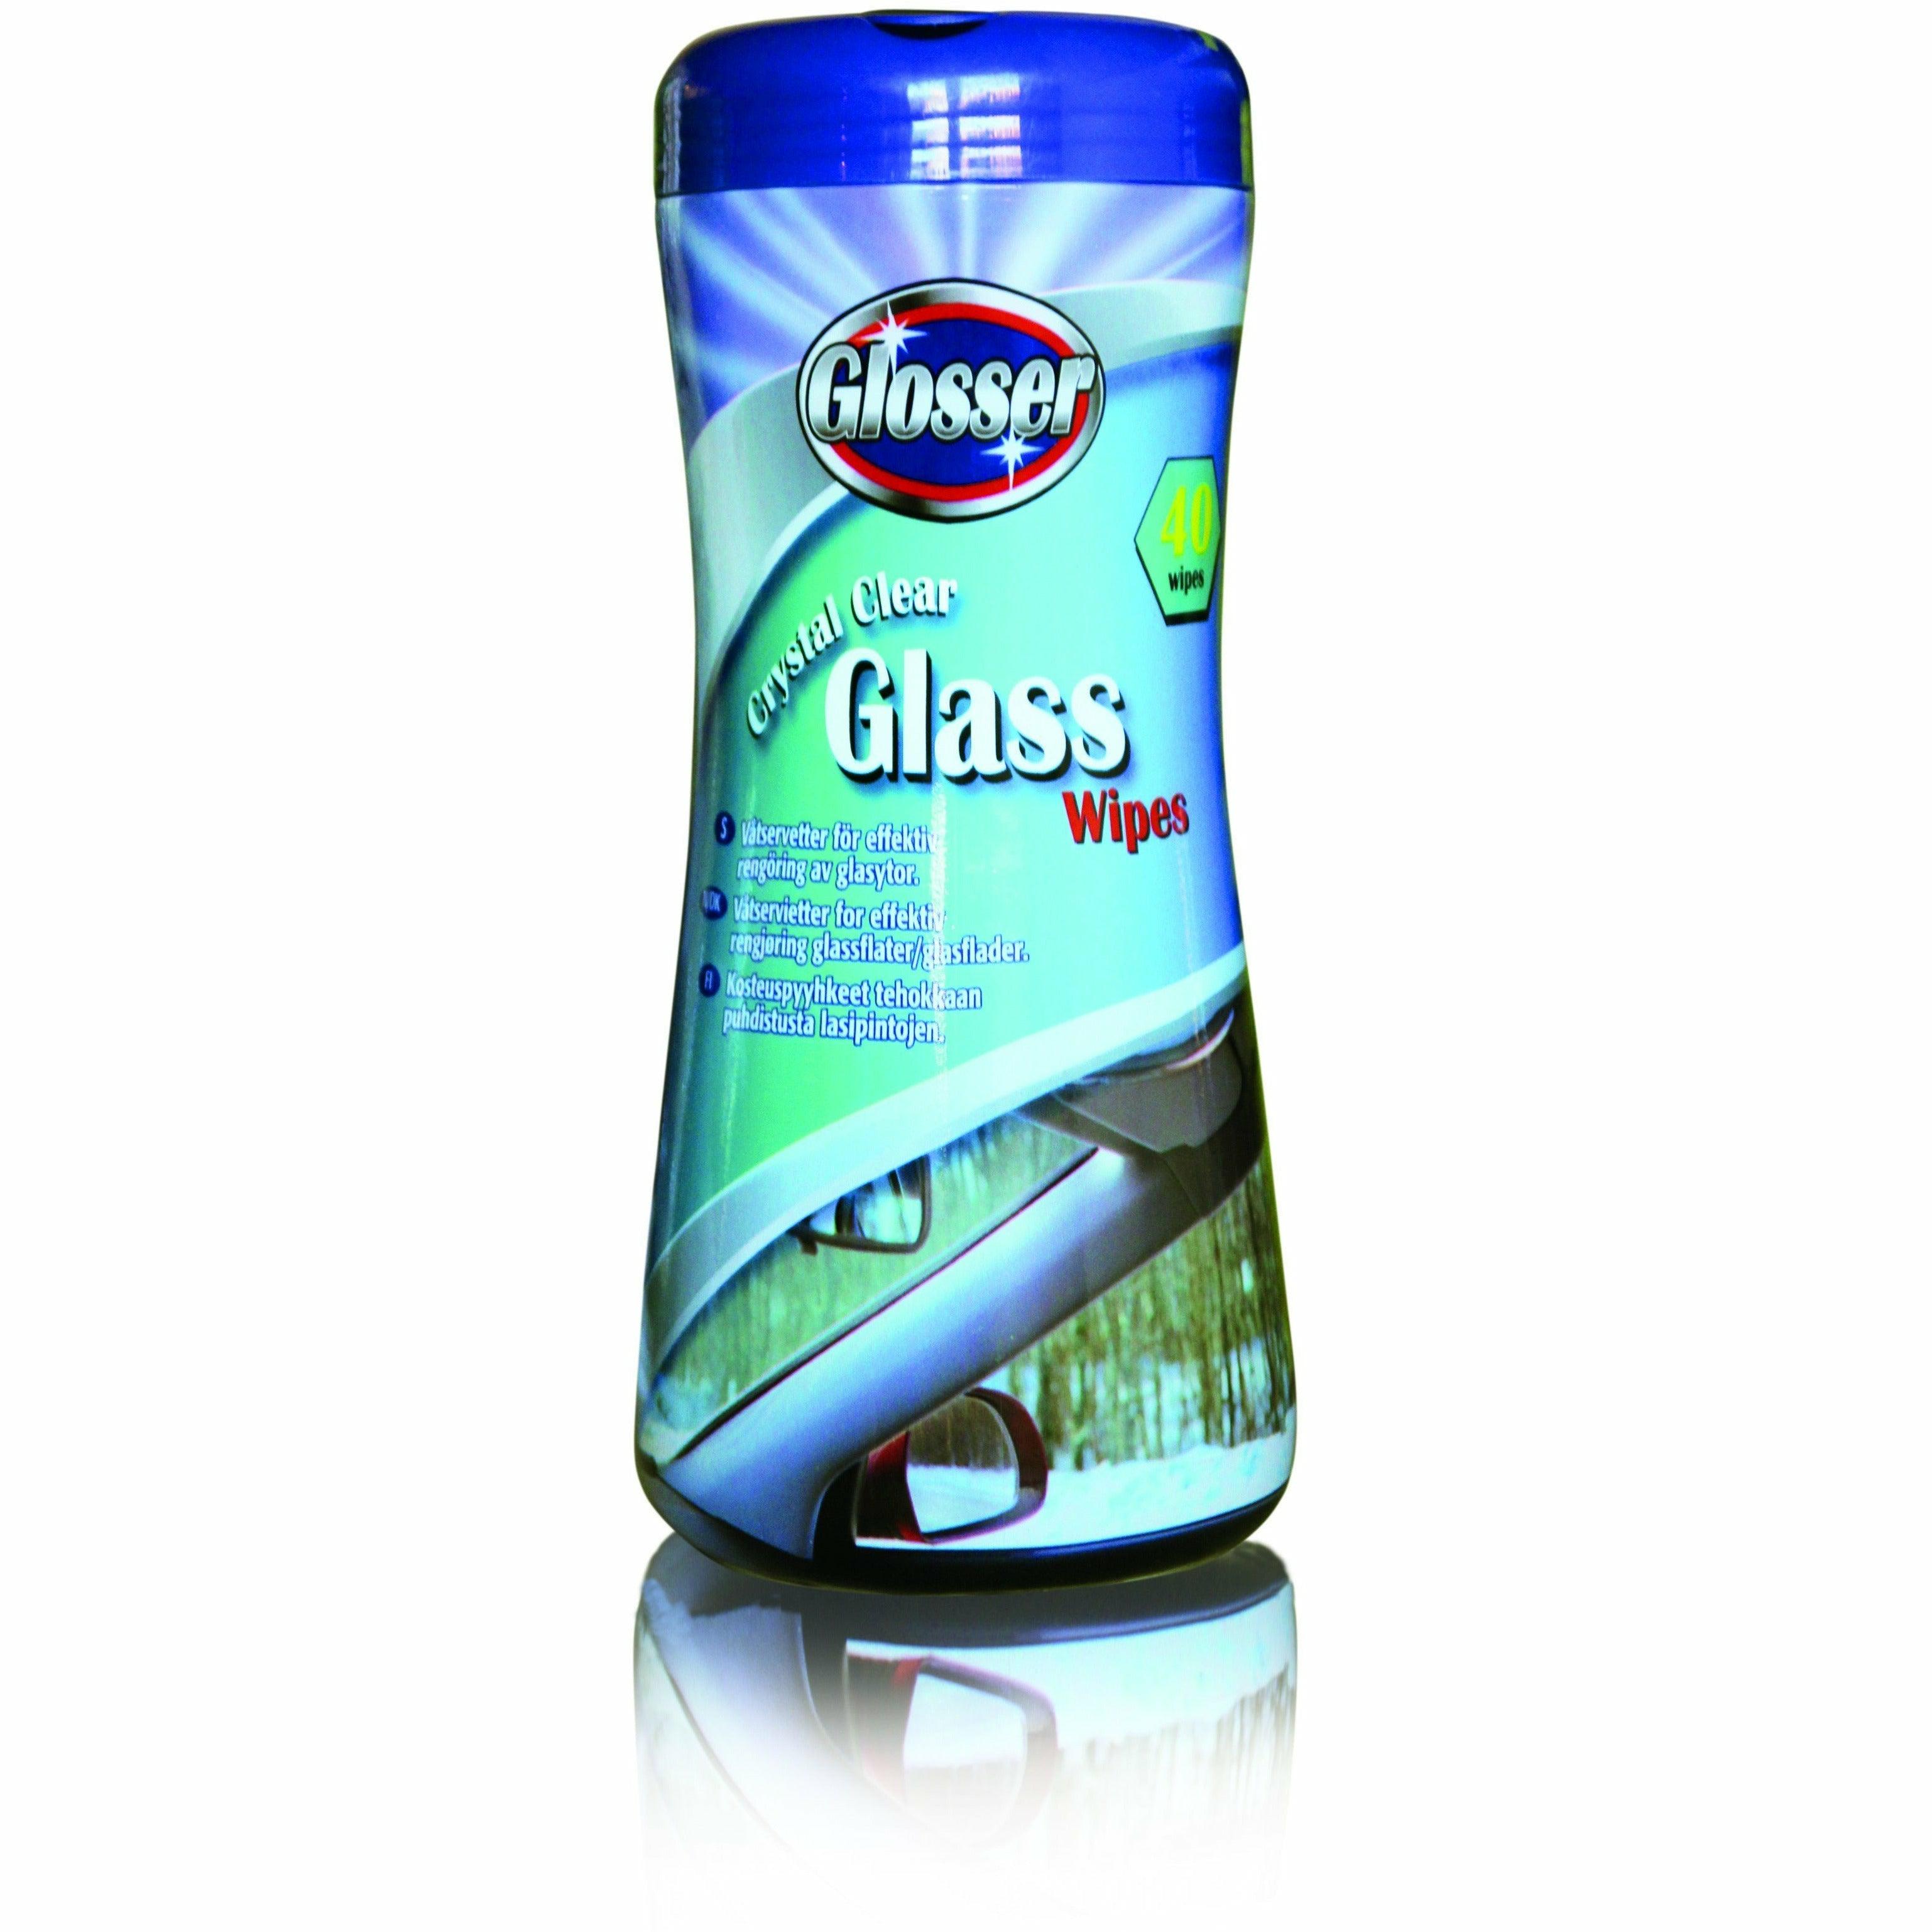 Glosser Ruder & Glas